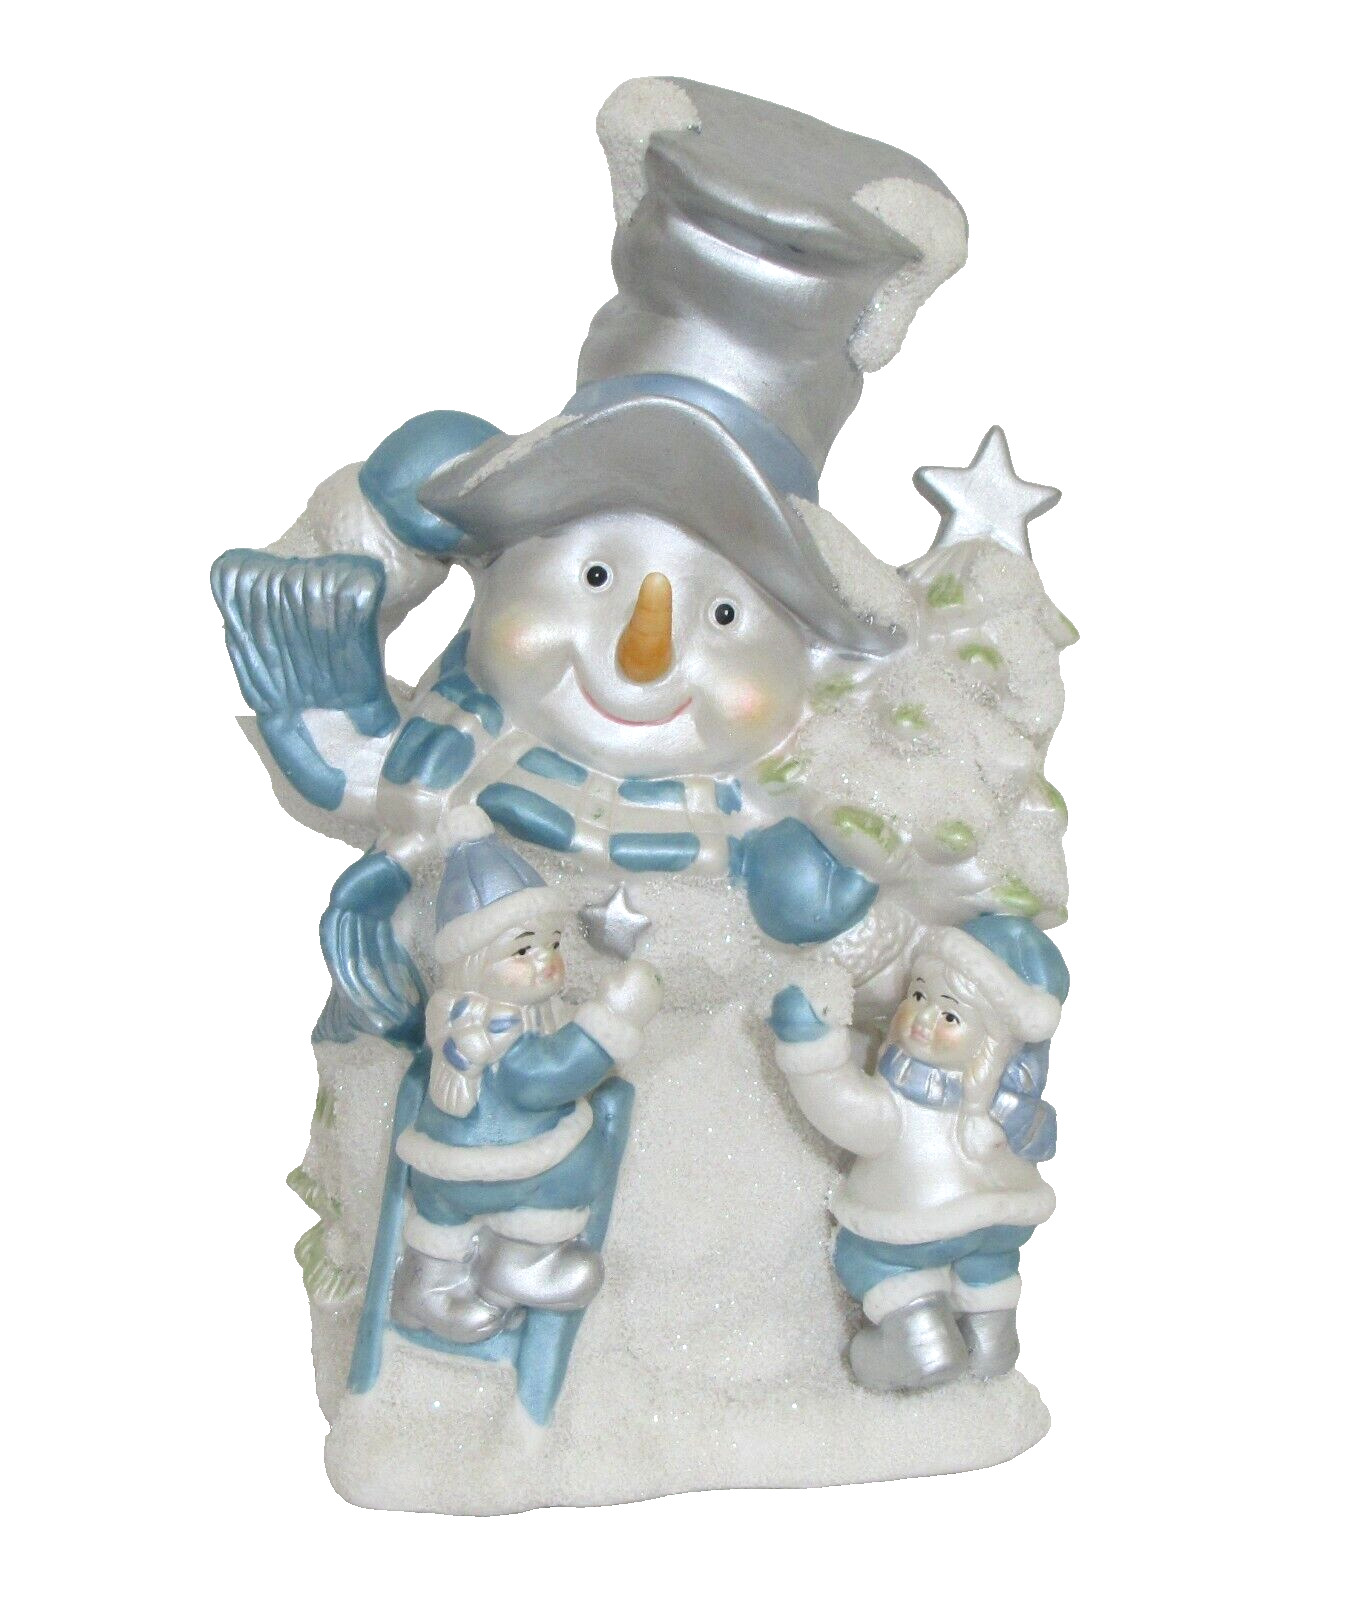 Vintage Music Box Ornament White Ceramic Top Hat Snowman Children Holiday Decor